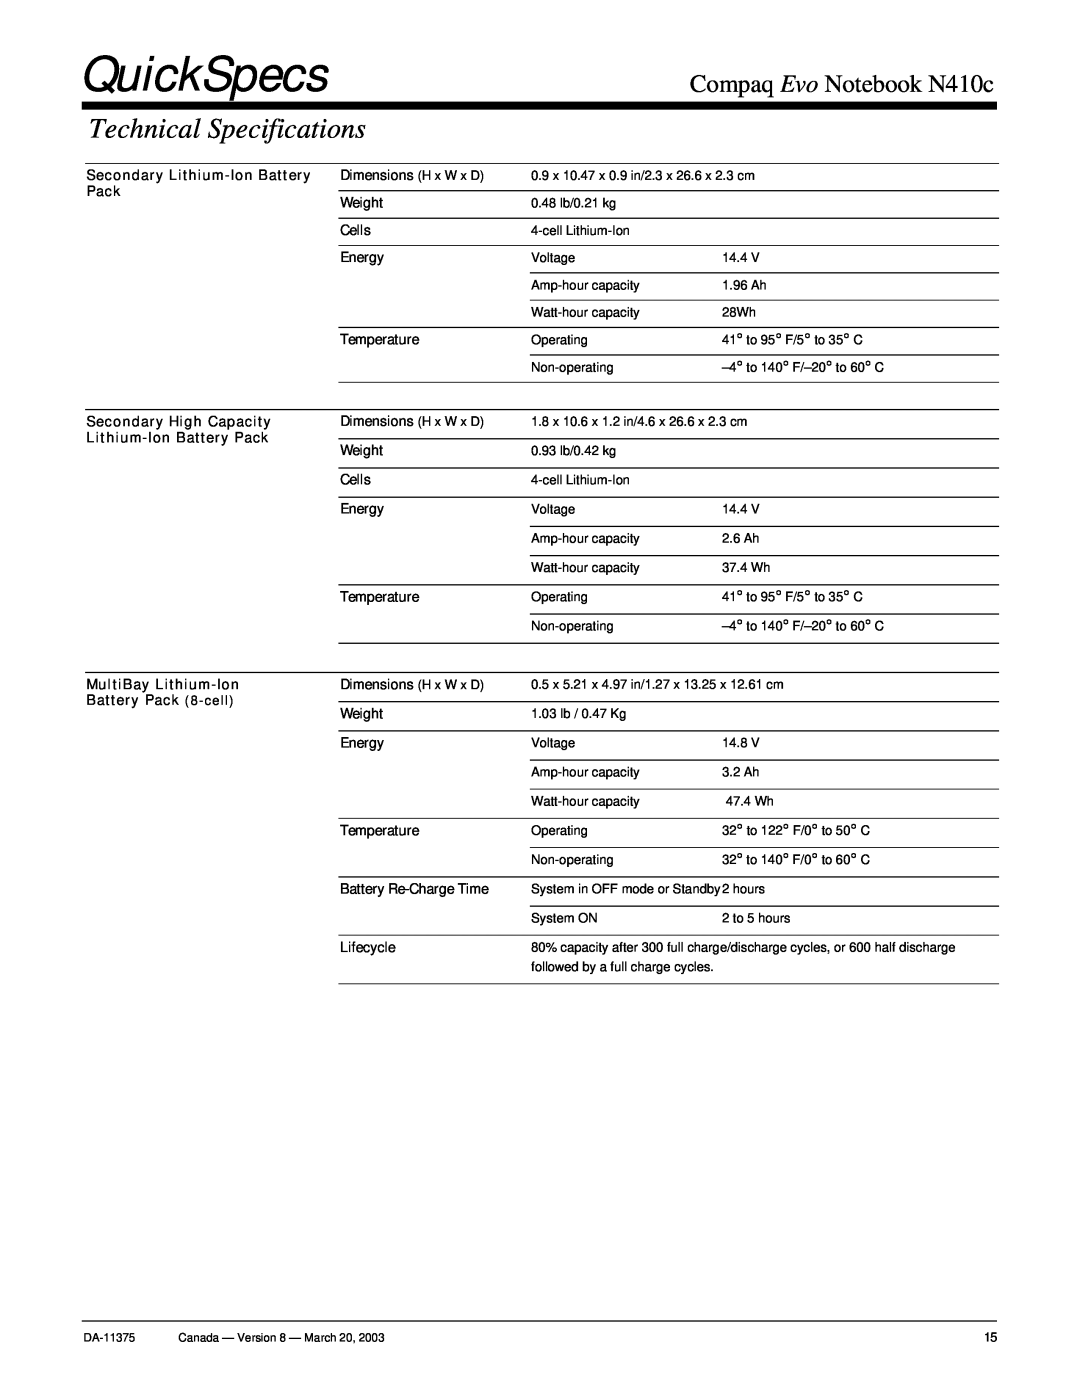 Compaq warranty QuickSpecs, Technical Specifications, Compaq Evo Notebook N410c 